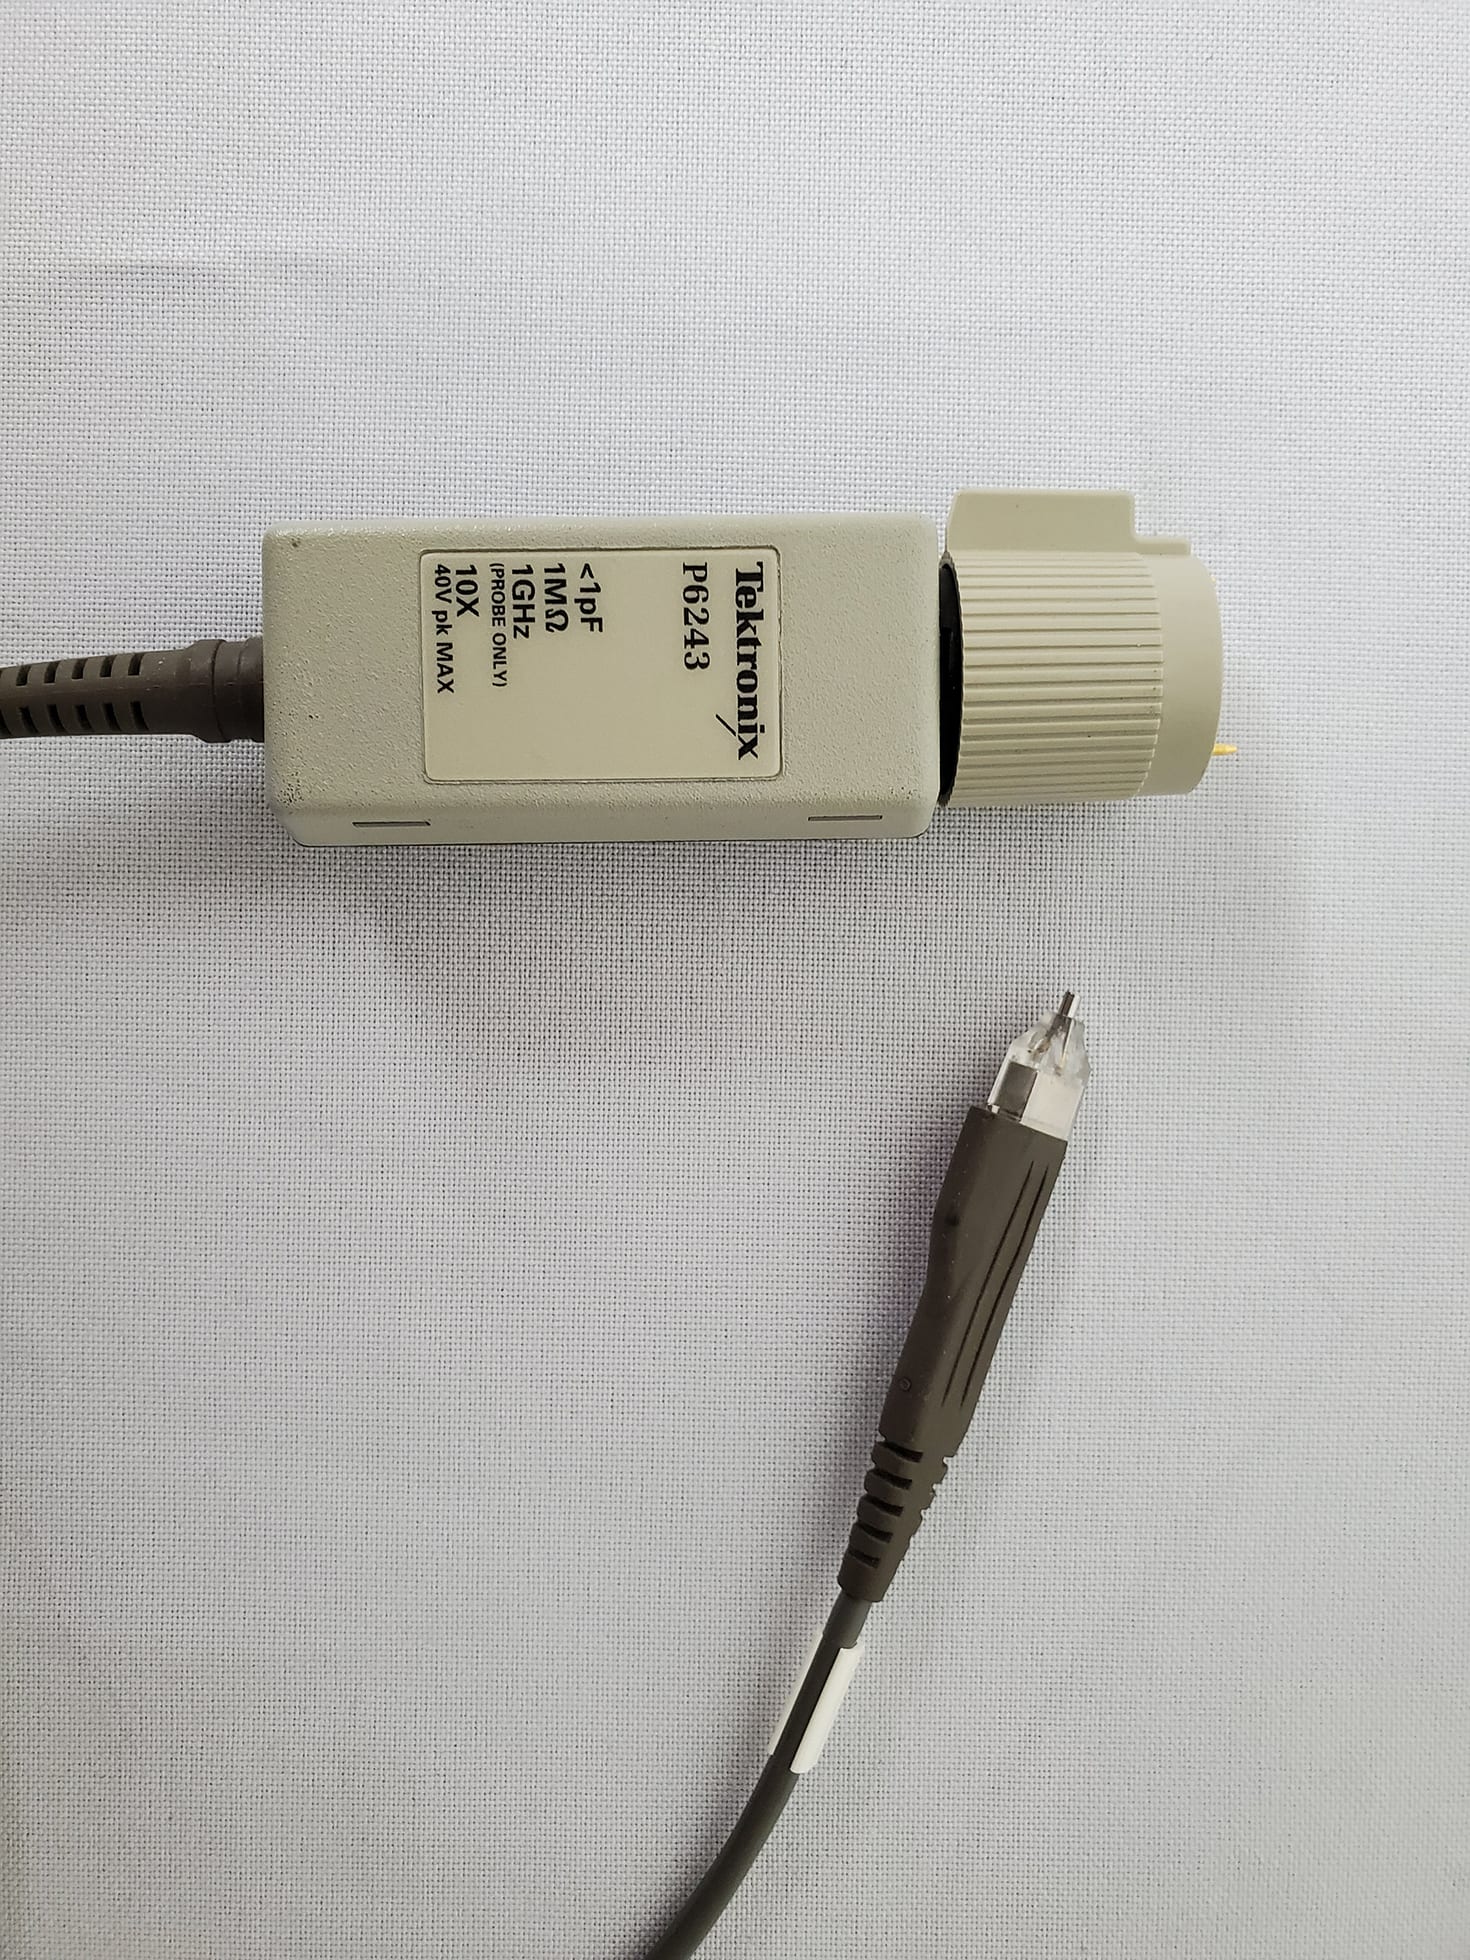 Tektronix-P 6243-Active Oscilloscope Probe-58214 For Sale